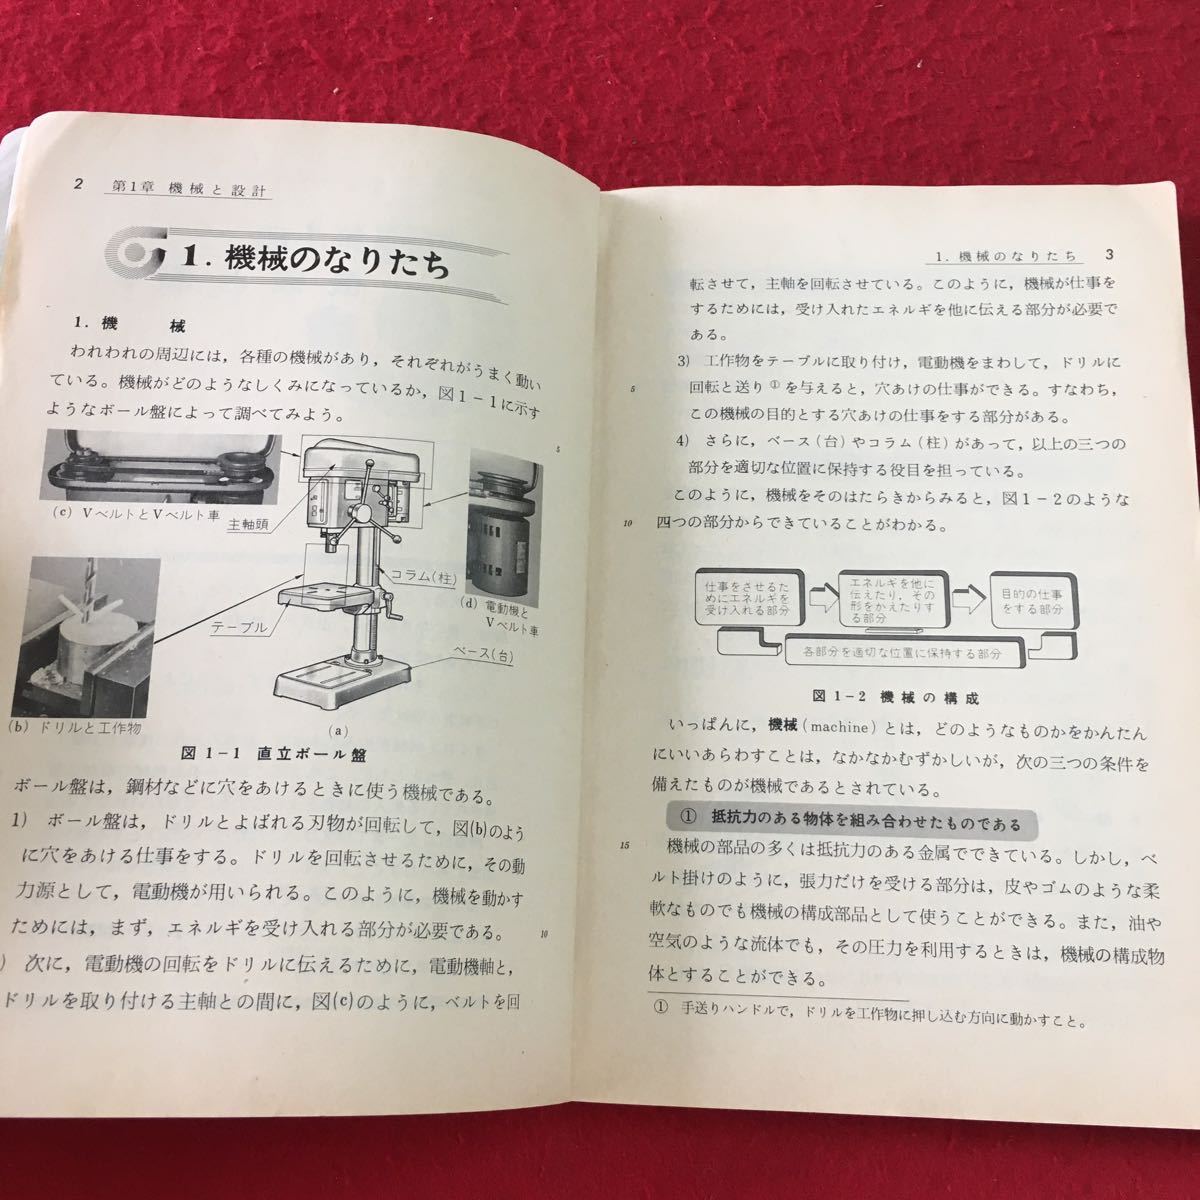 M5c-050 機械設計 1 著者 津村利光 徳丸芳男 昭和60年2月25日 発行 実教出版 教科書 工学 機械 設計 物理学 力 運動 材料 ねじ 軸 三角関数_画像5